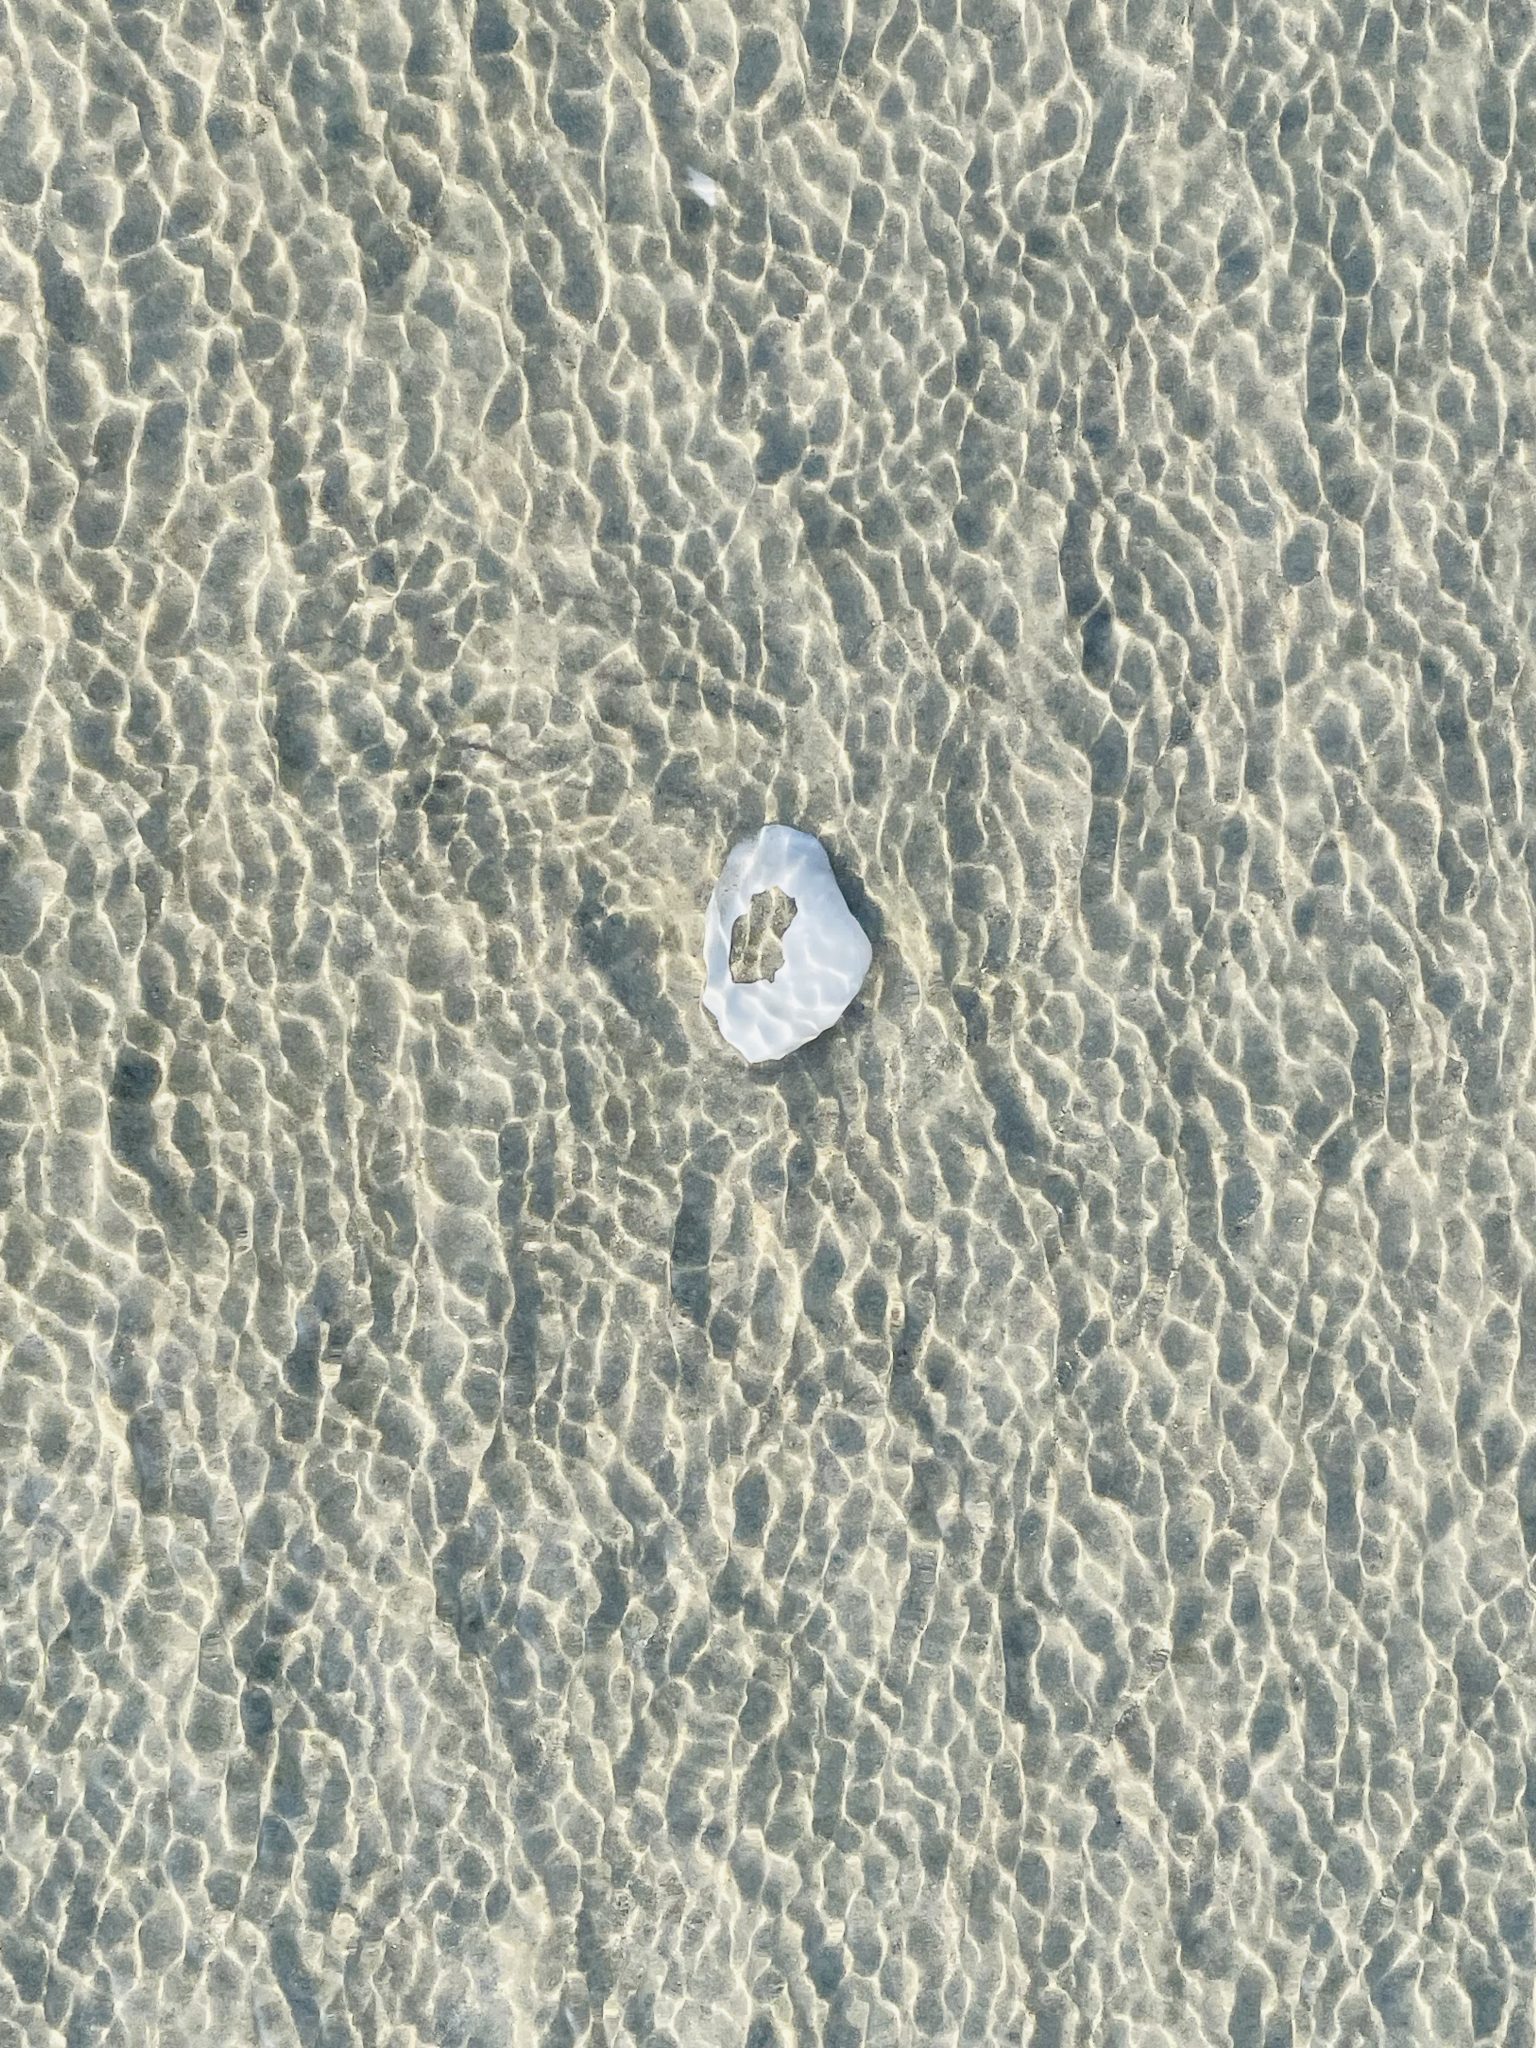 A broken seashell in ripple. From Kozhikode, Kerala, India.